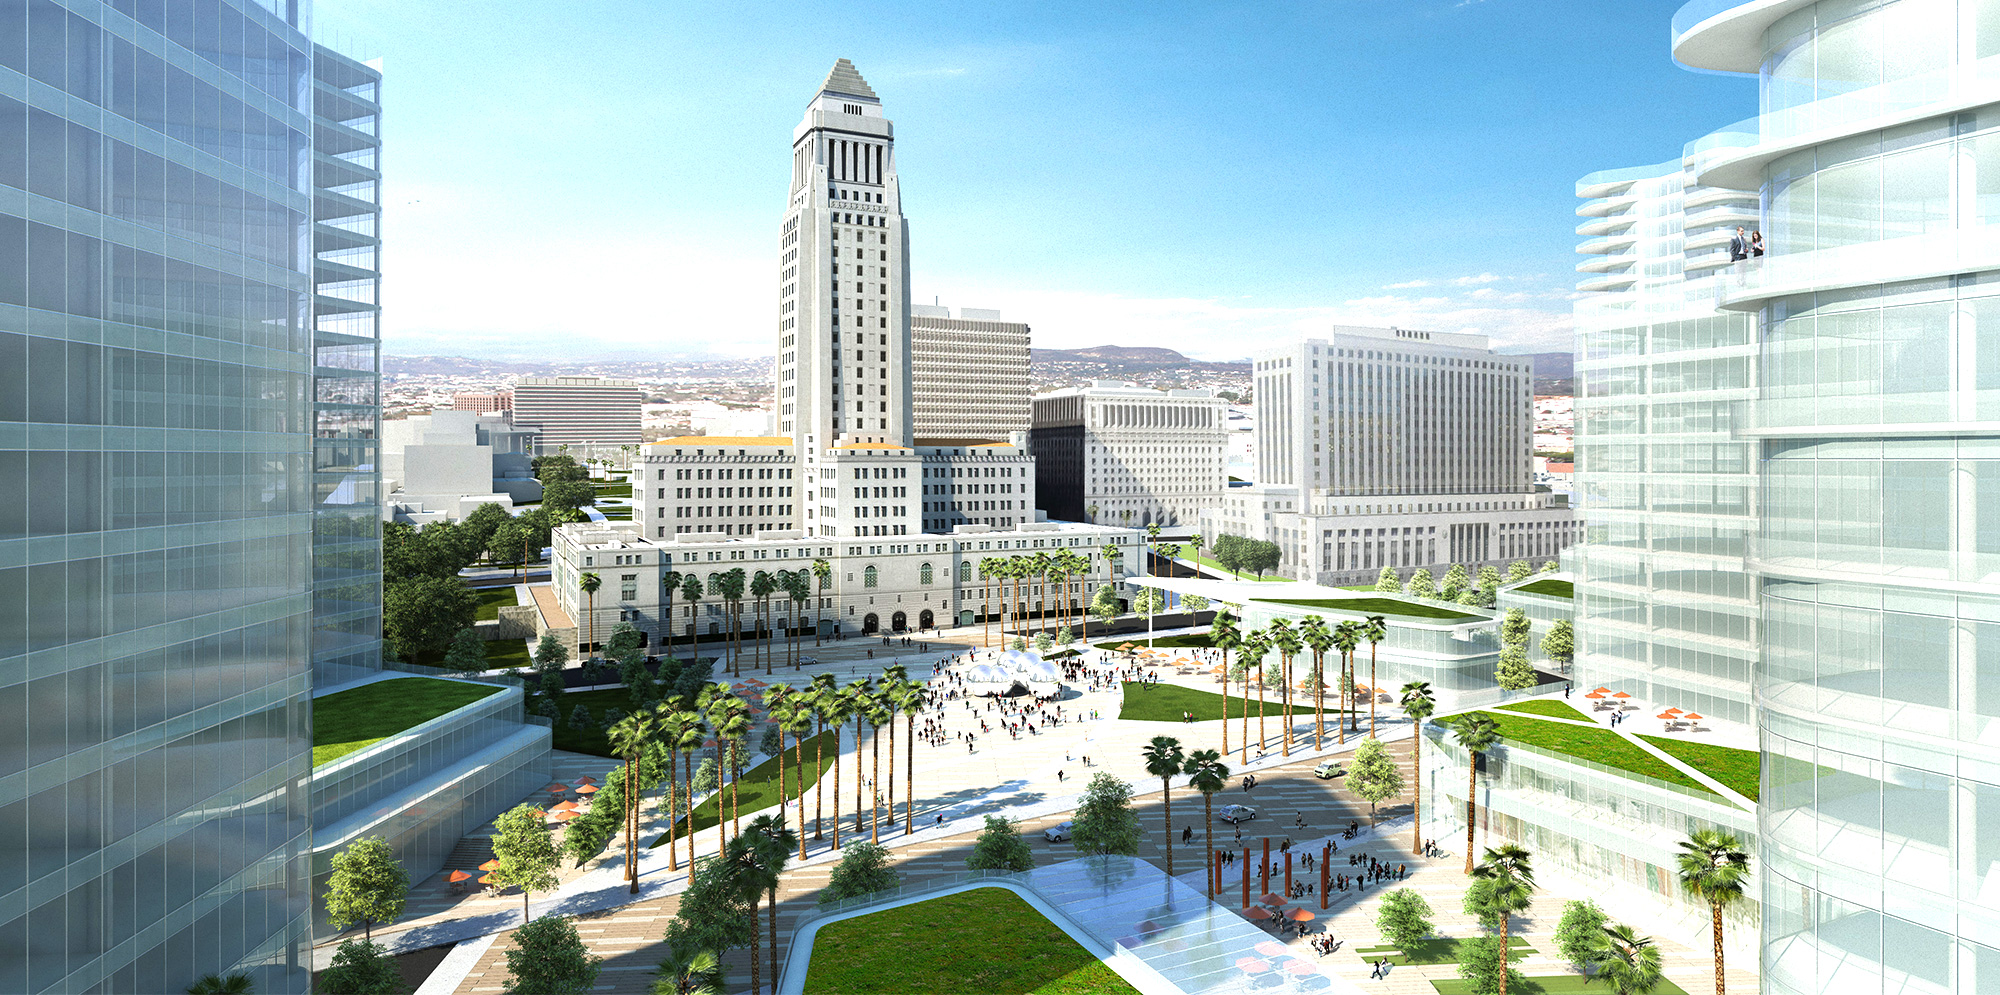 Los Angeles civic center master plan plaza